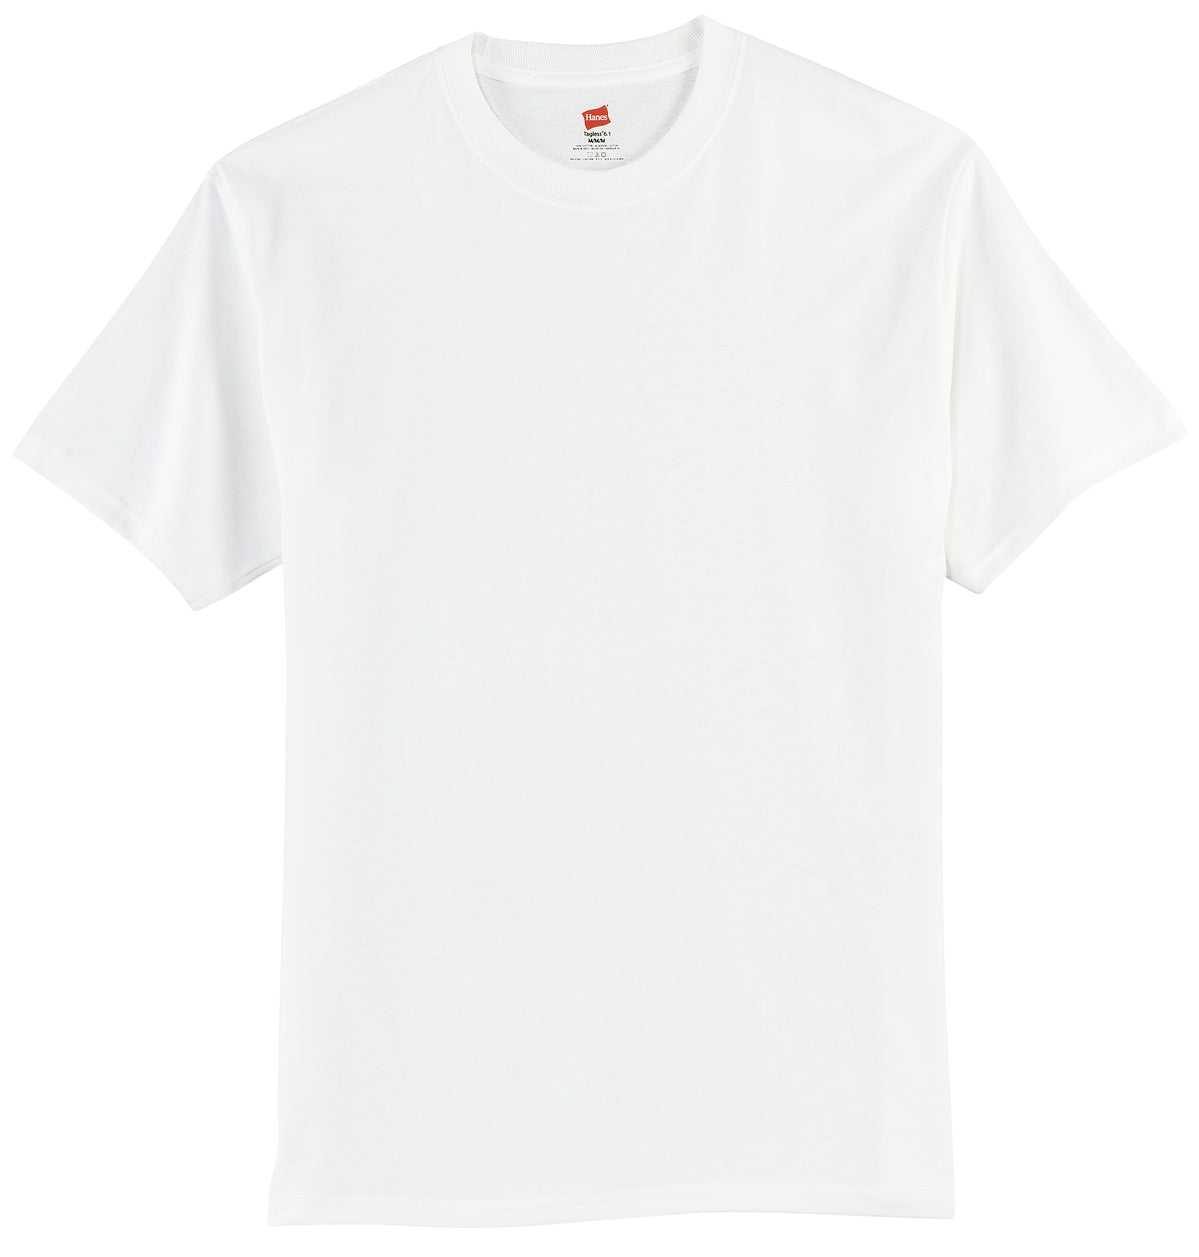 Hanes 5250 Tagless 100% Cotton T-Shirt - White